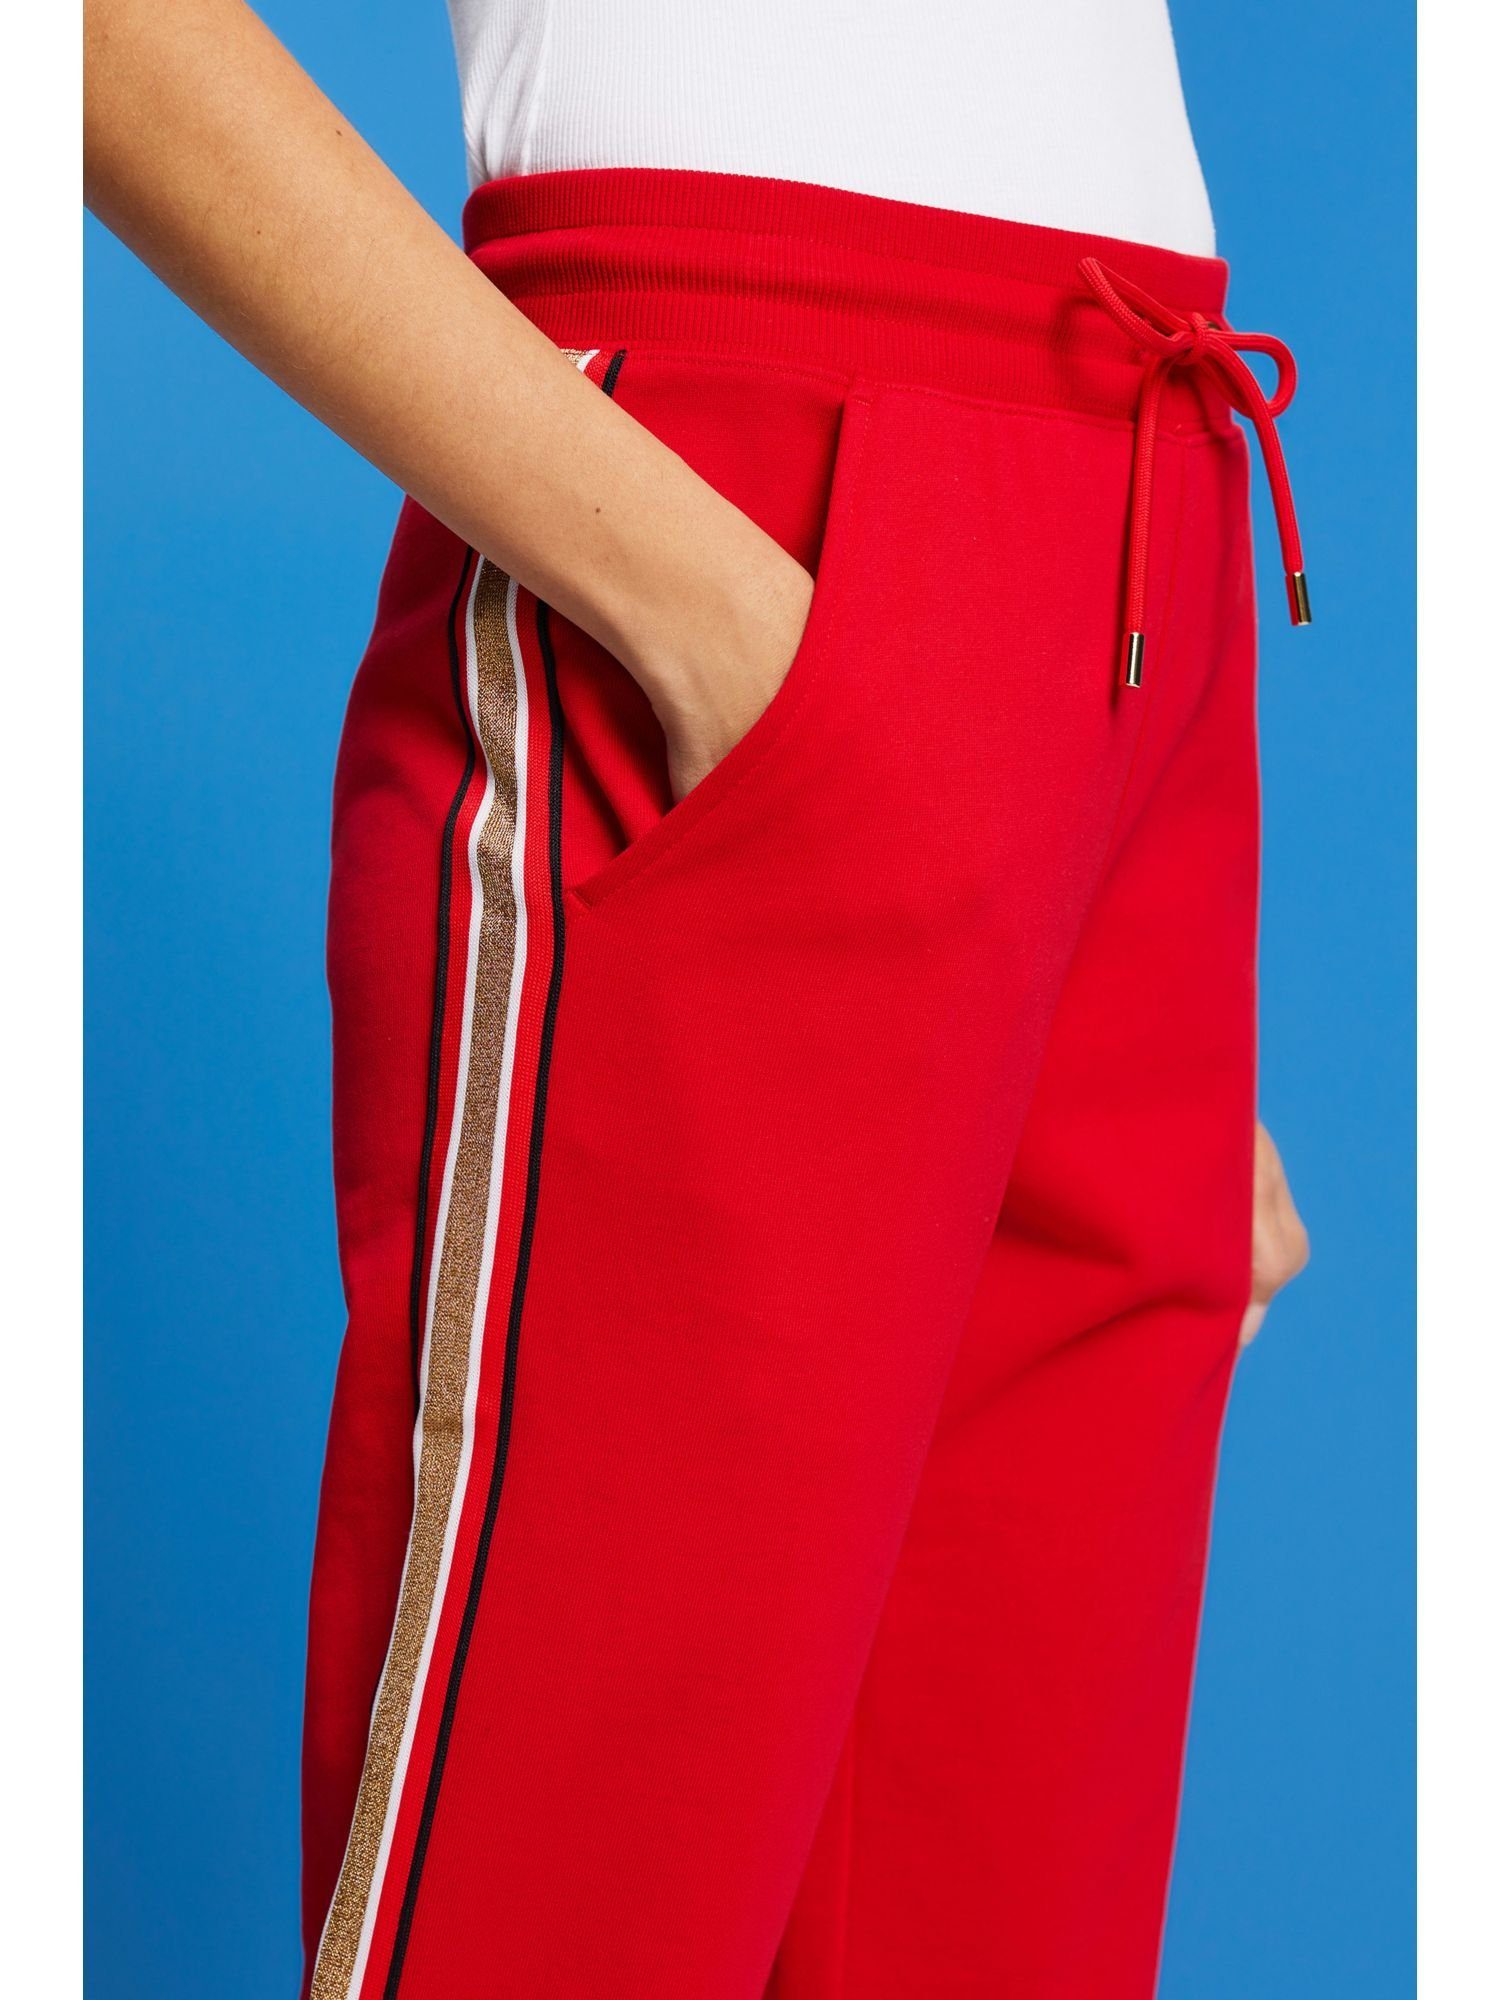 Pants aus Trackpants RED Baumwolle Esprit Gestreifte Jogger